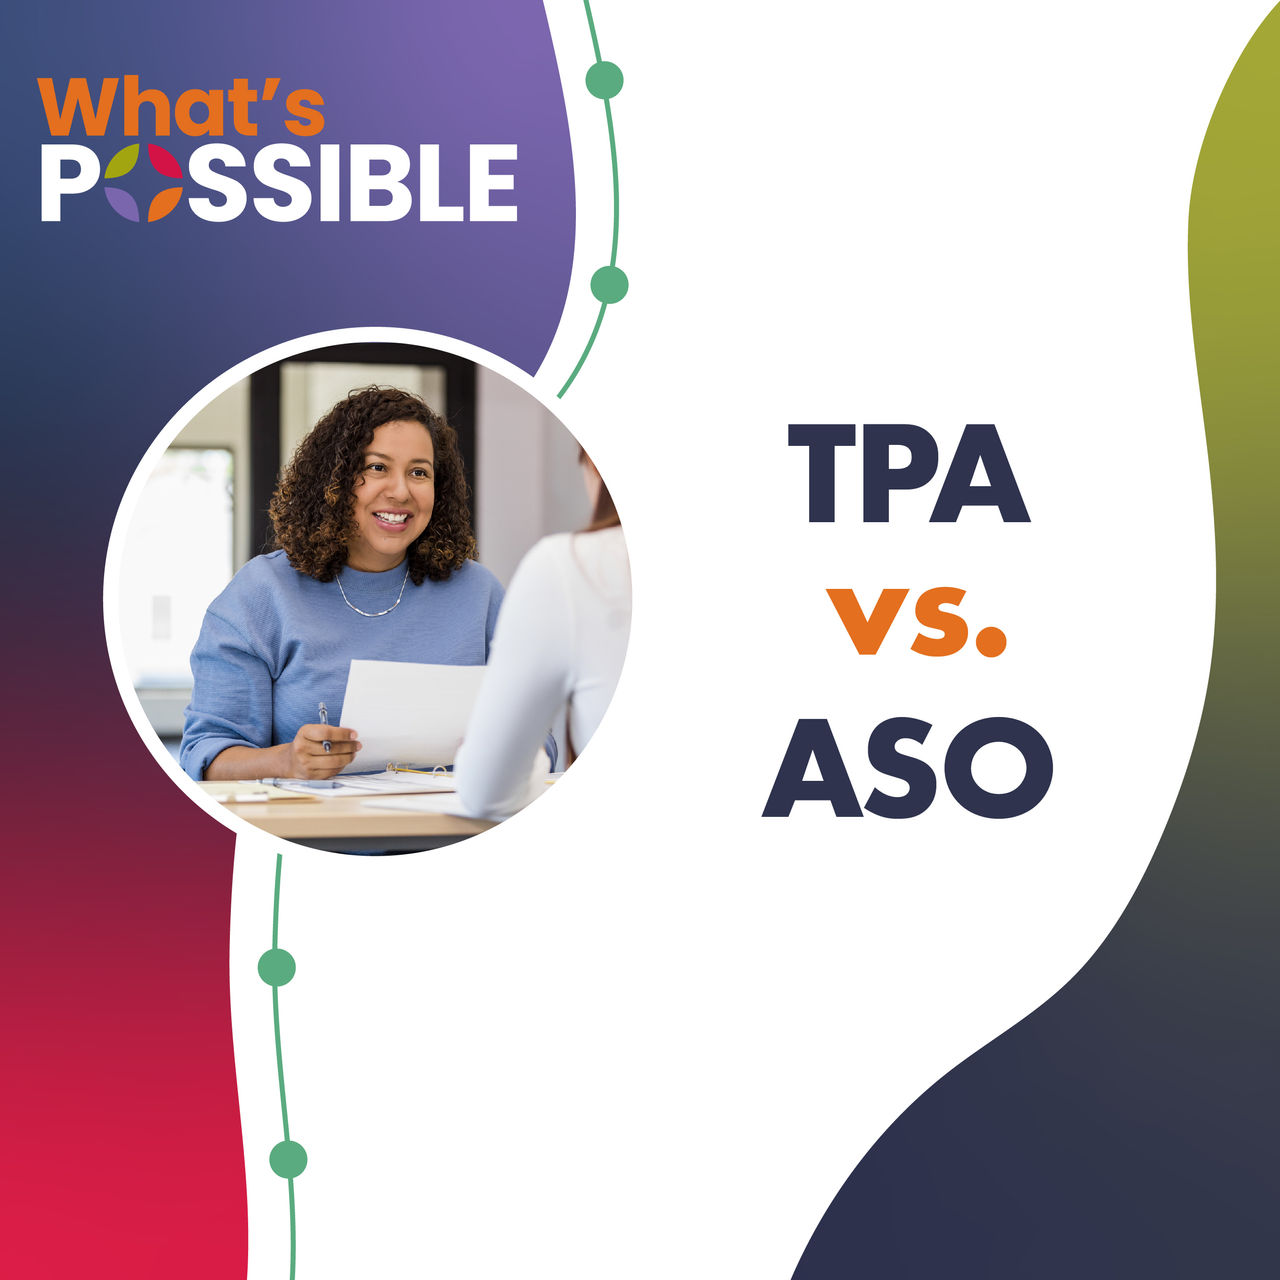 TPAs vs. ASOs